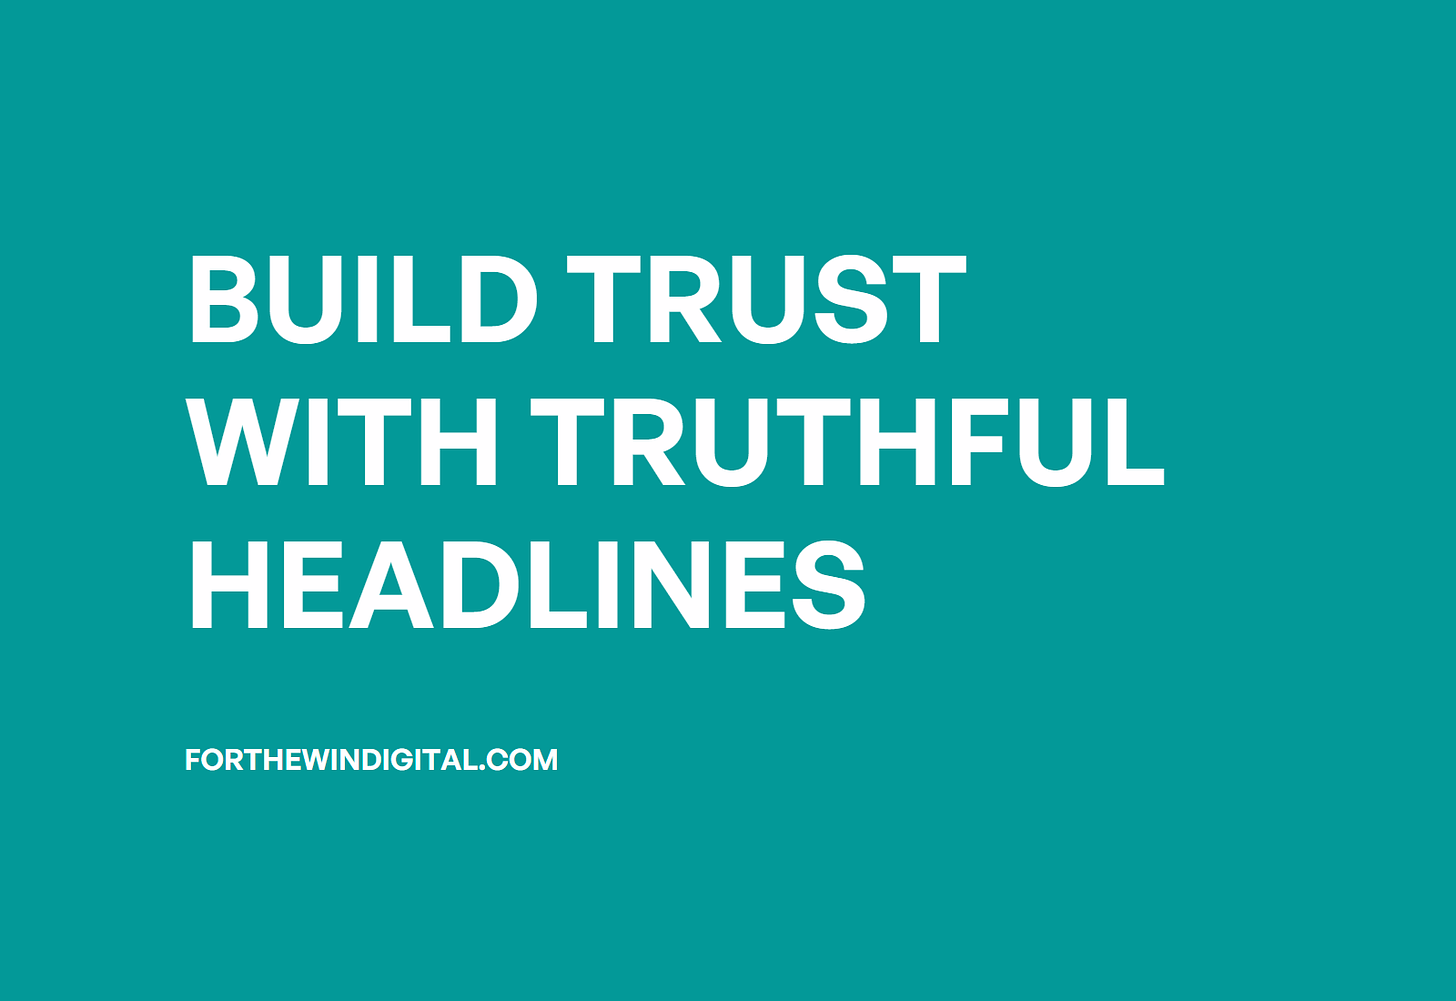 Build trust with truthful headlines